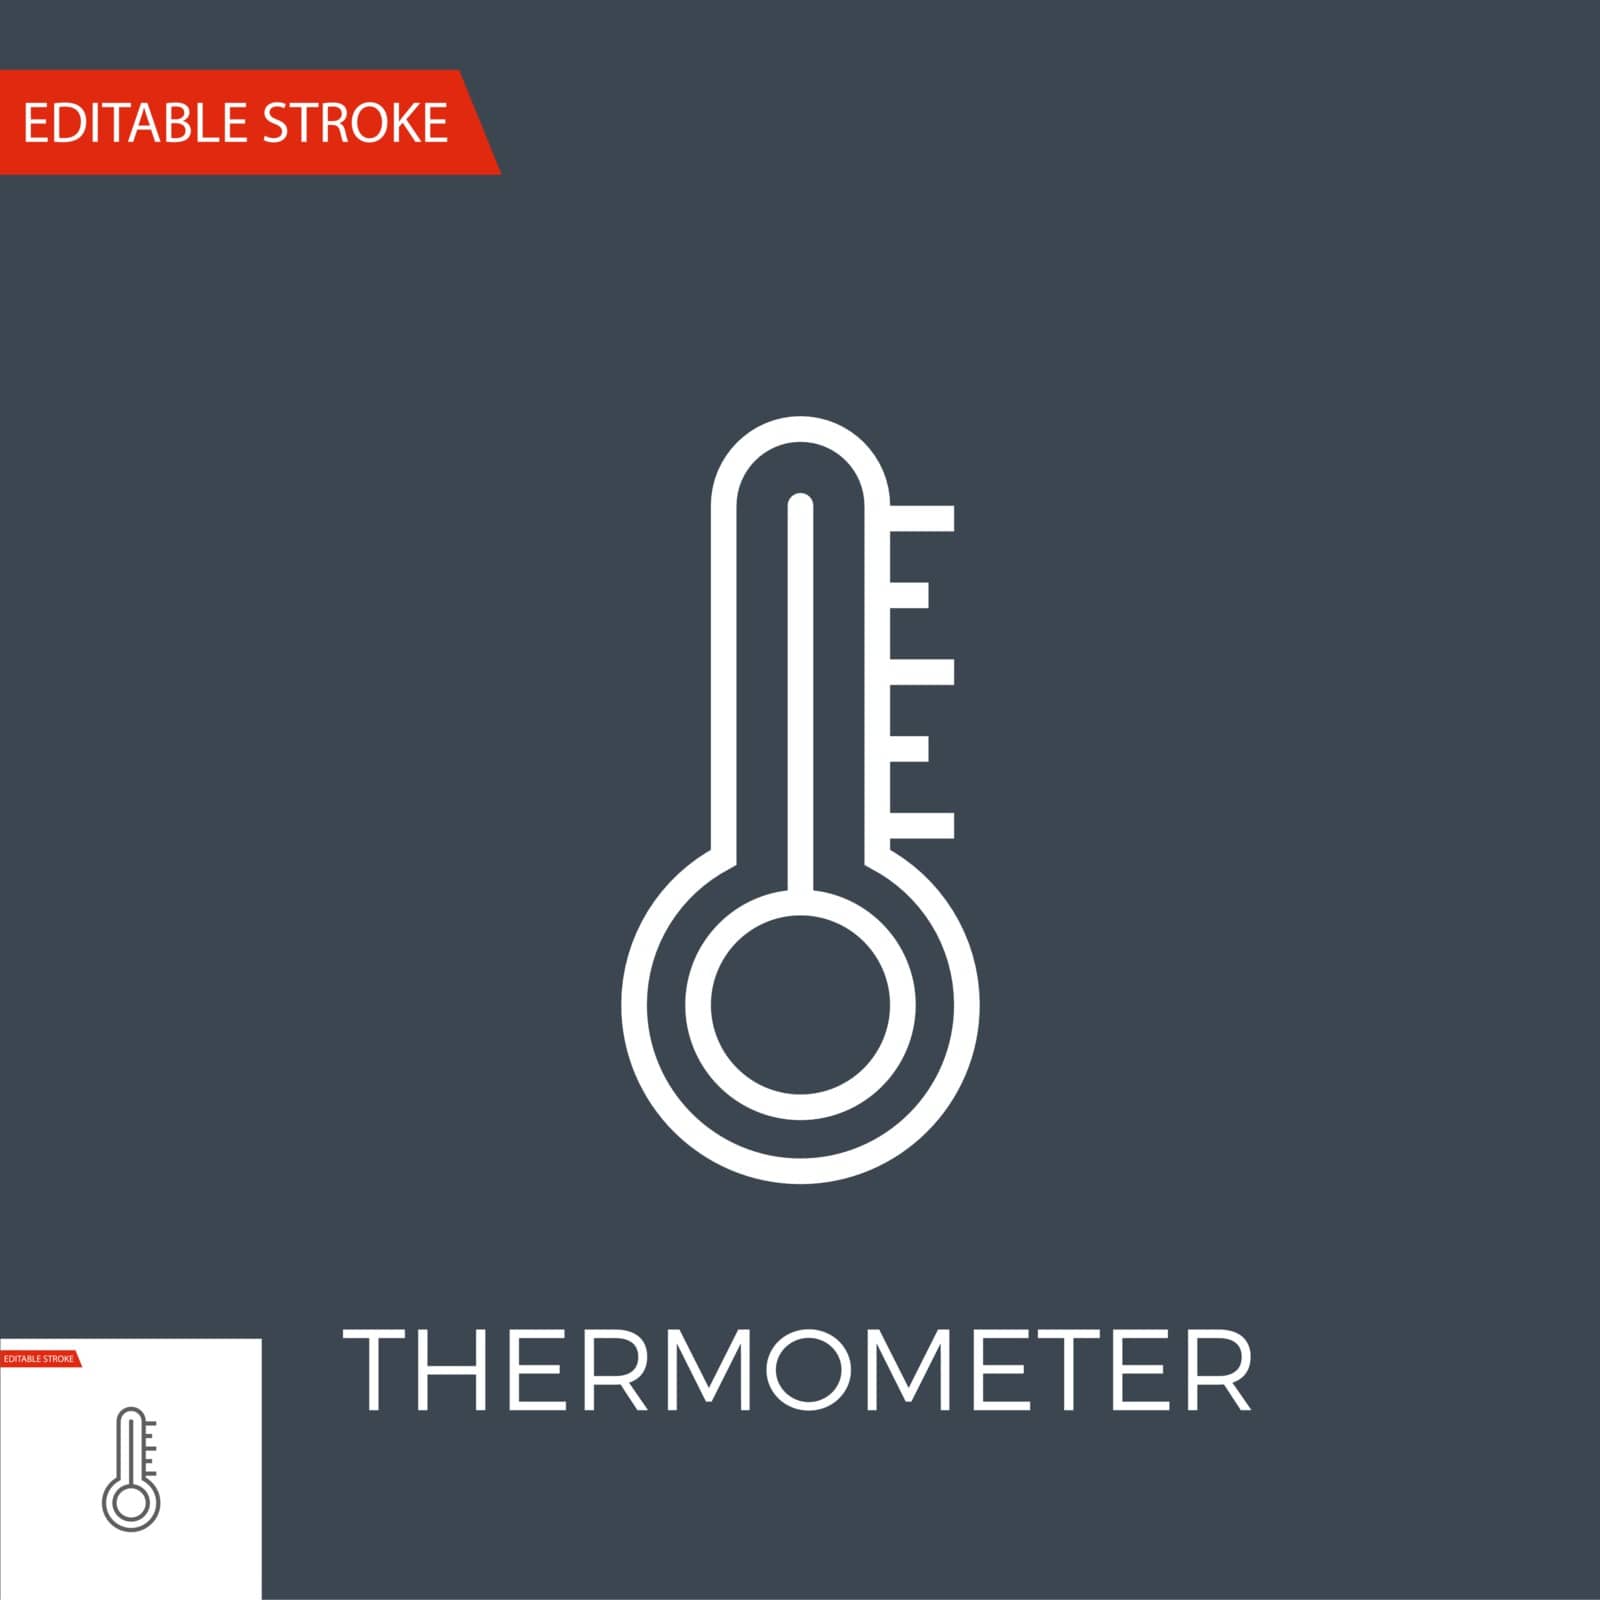 Thermometer Vector Icon by smoki